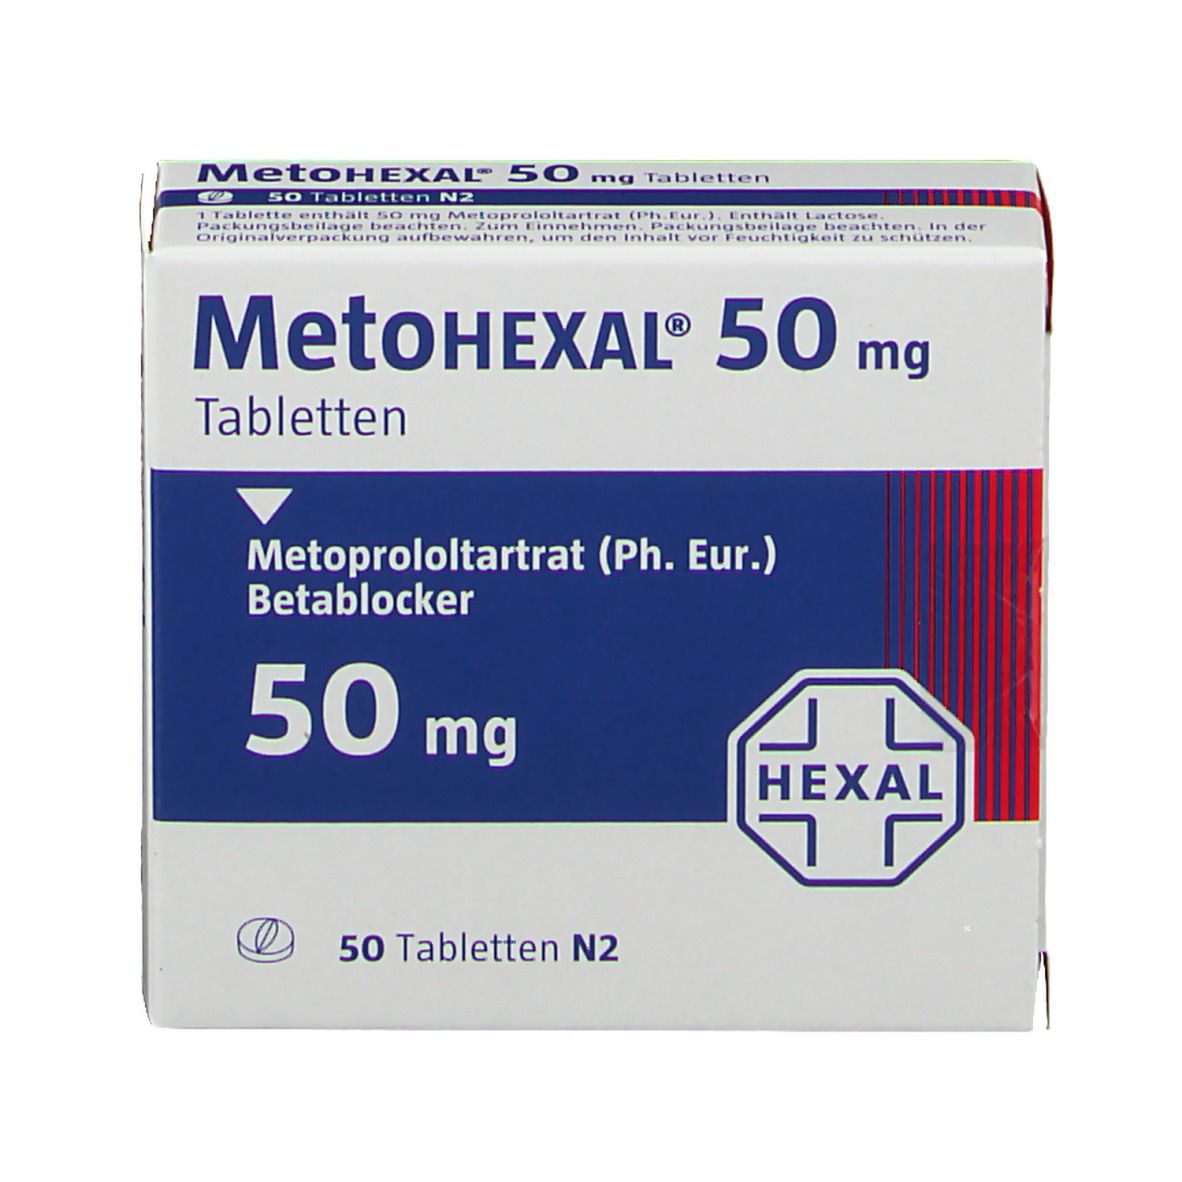 MetoHEXAL® 50 mg